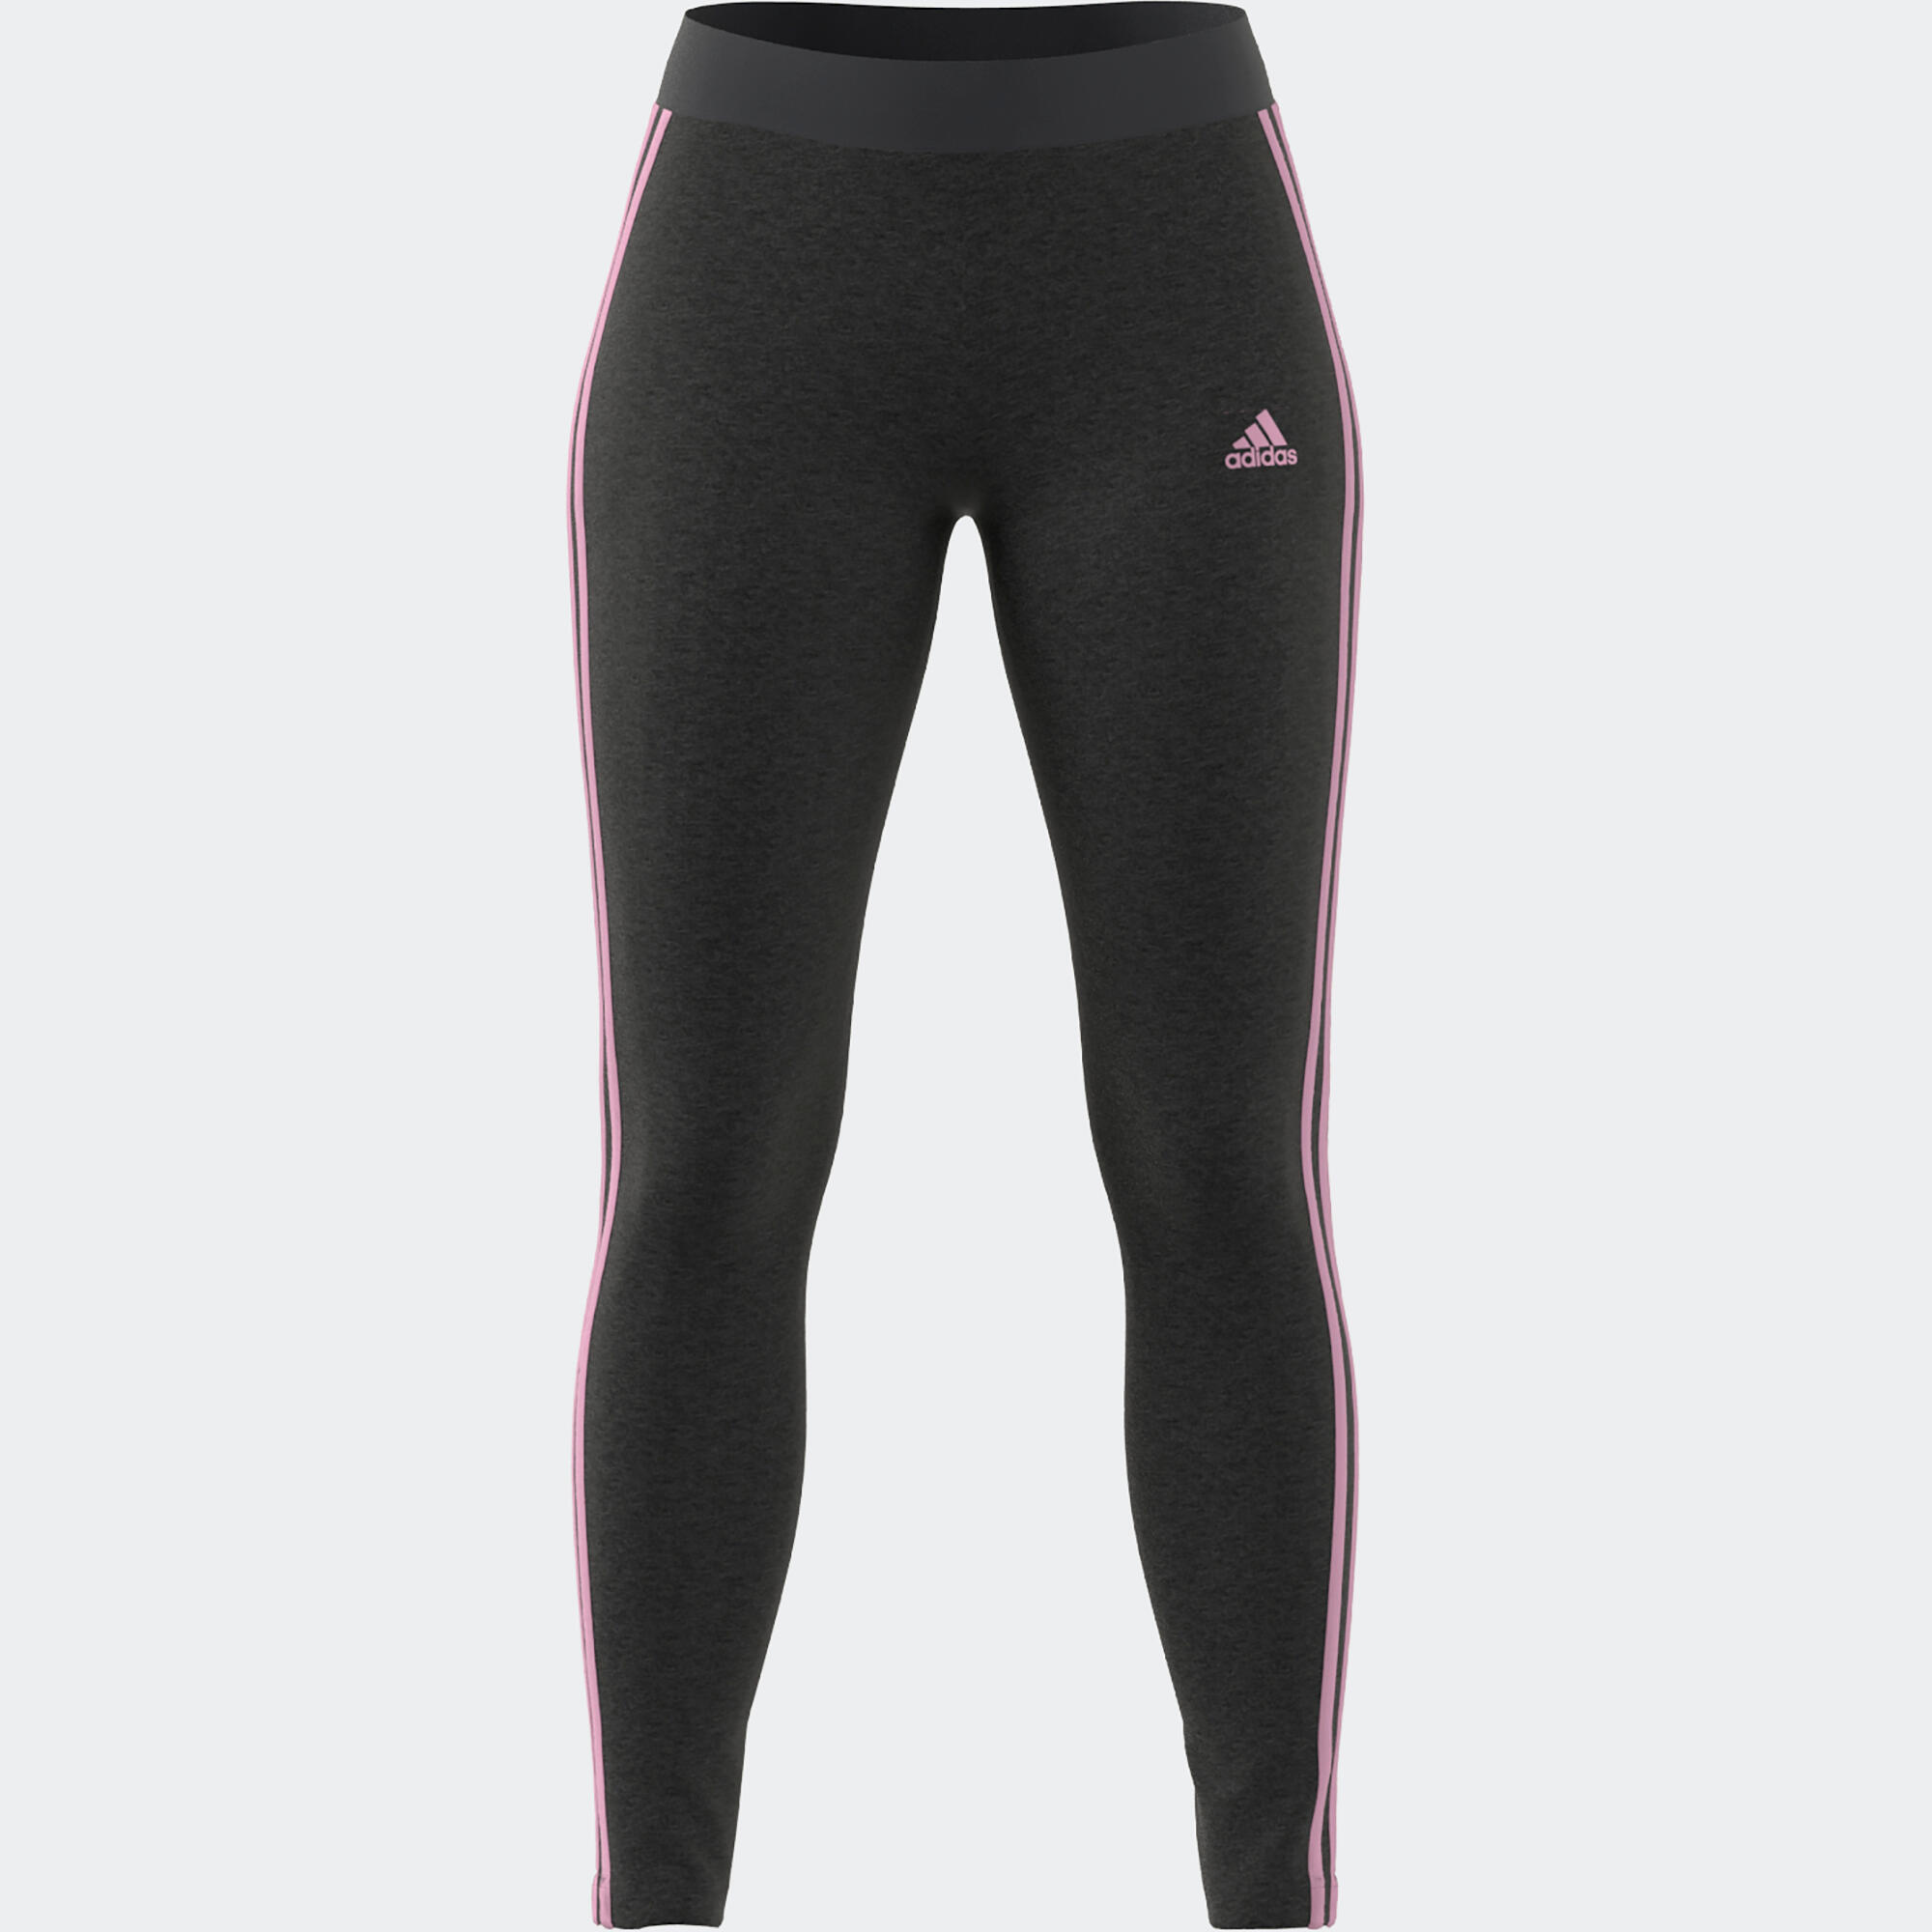 Women's Low-Impact Fitness Leggings - Grey/Pink 2/3